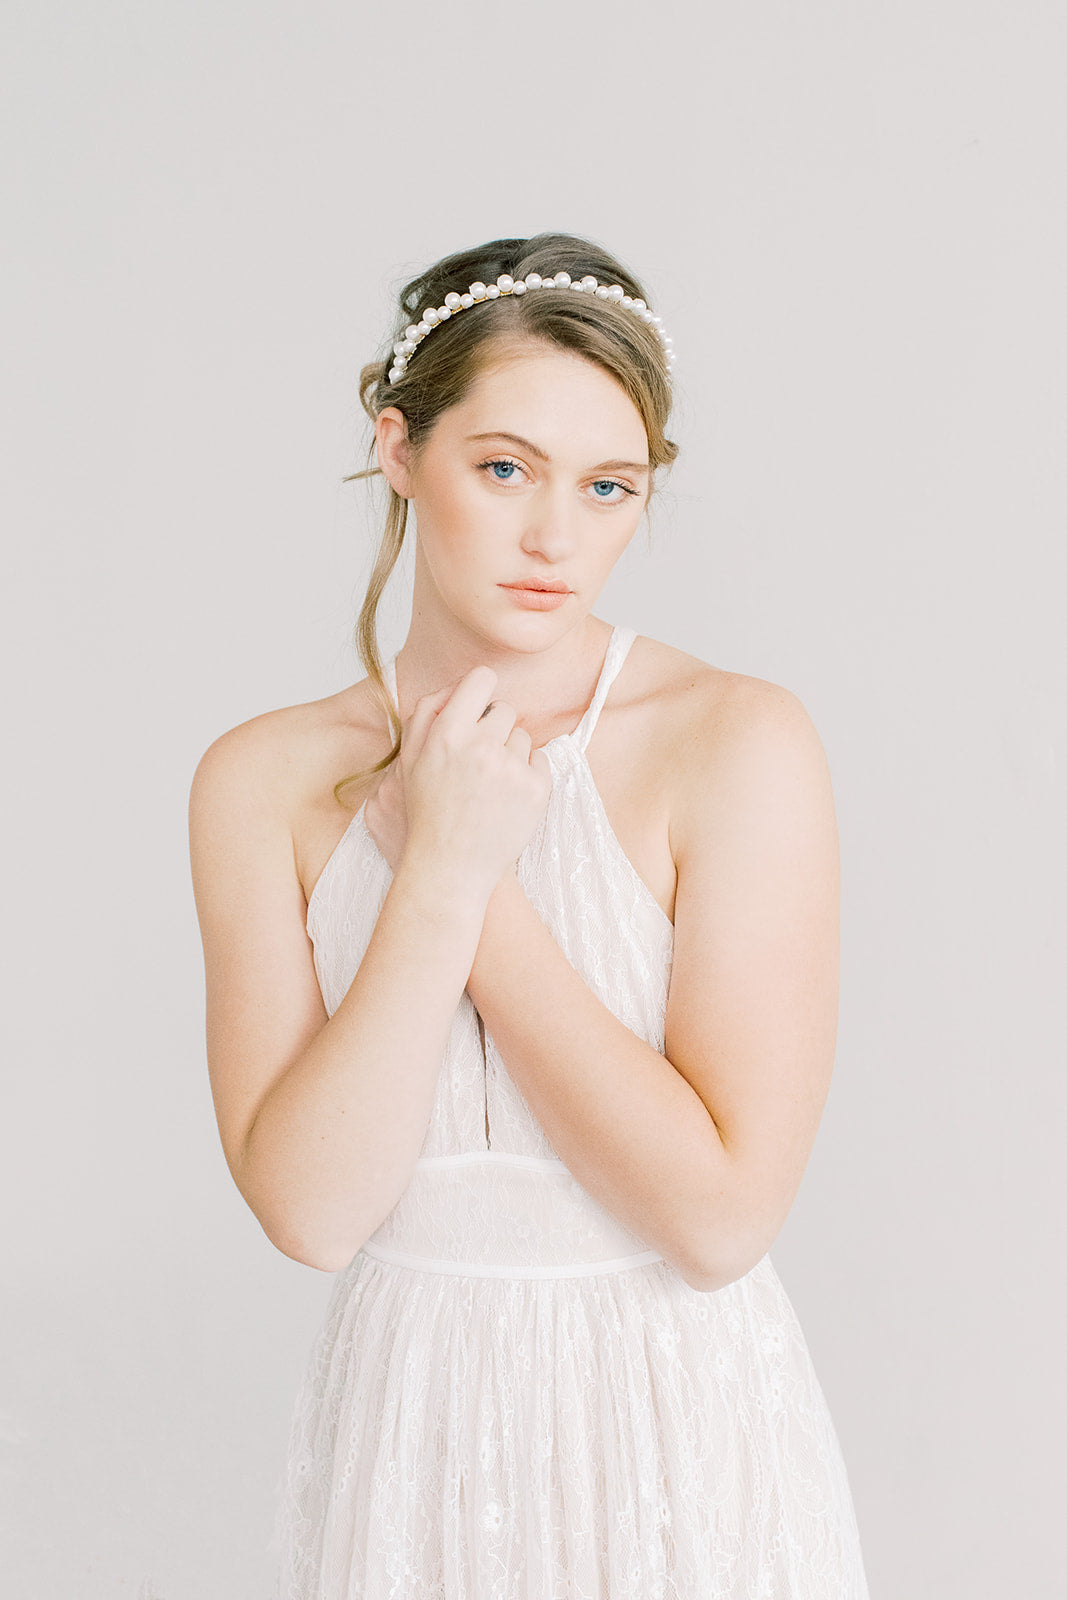 Simple Swarovski Pearl Headband - Hairpiece, Bridal, Head Piece, Hair Accessories, Pearls